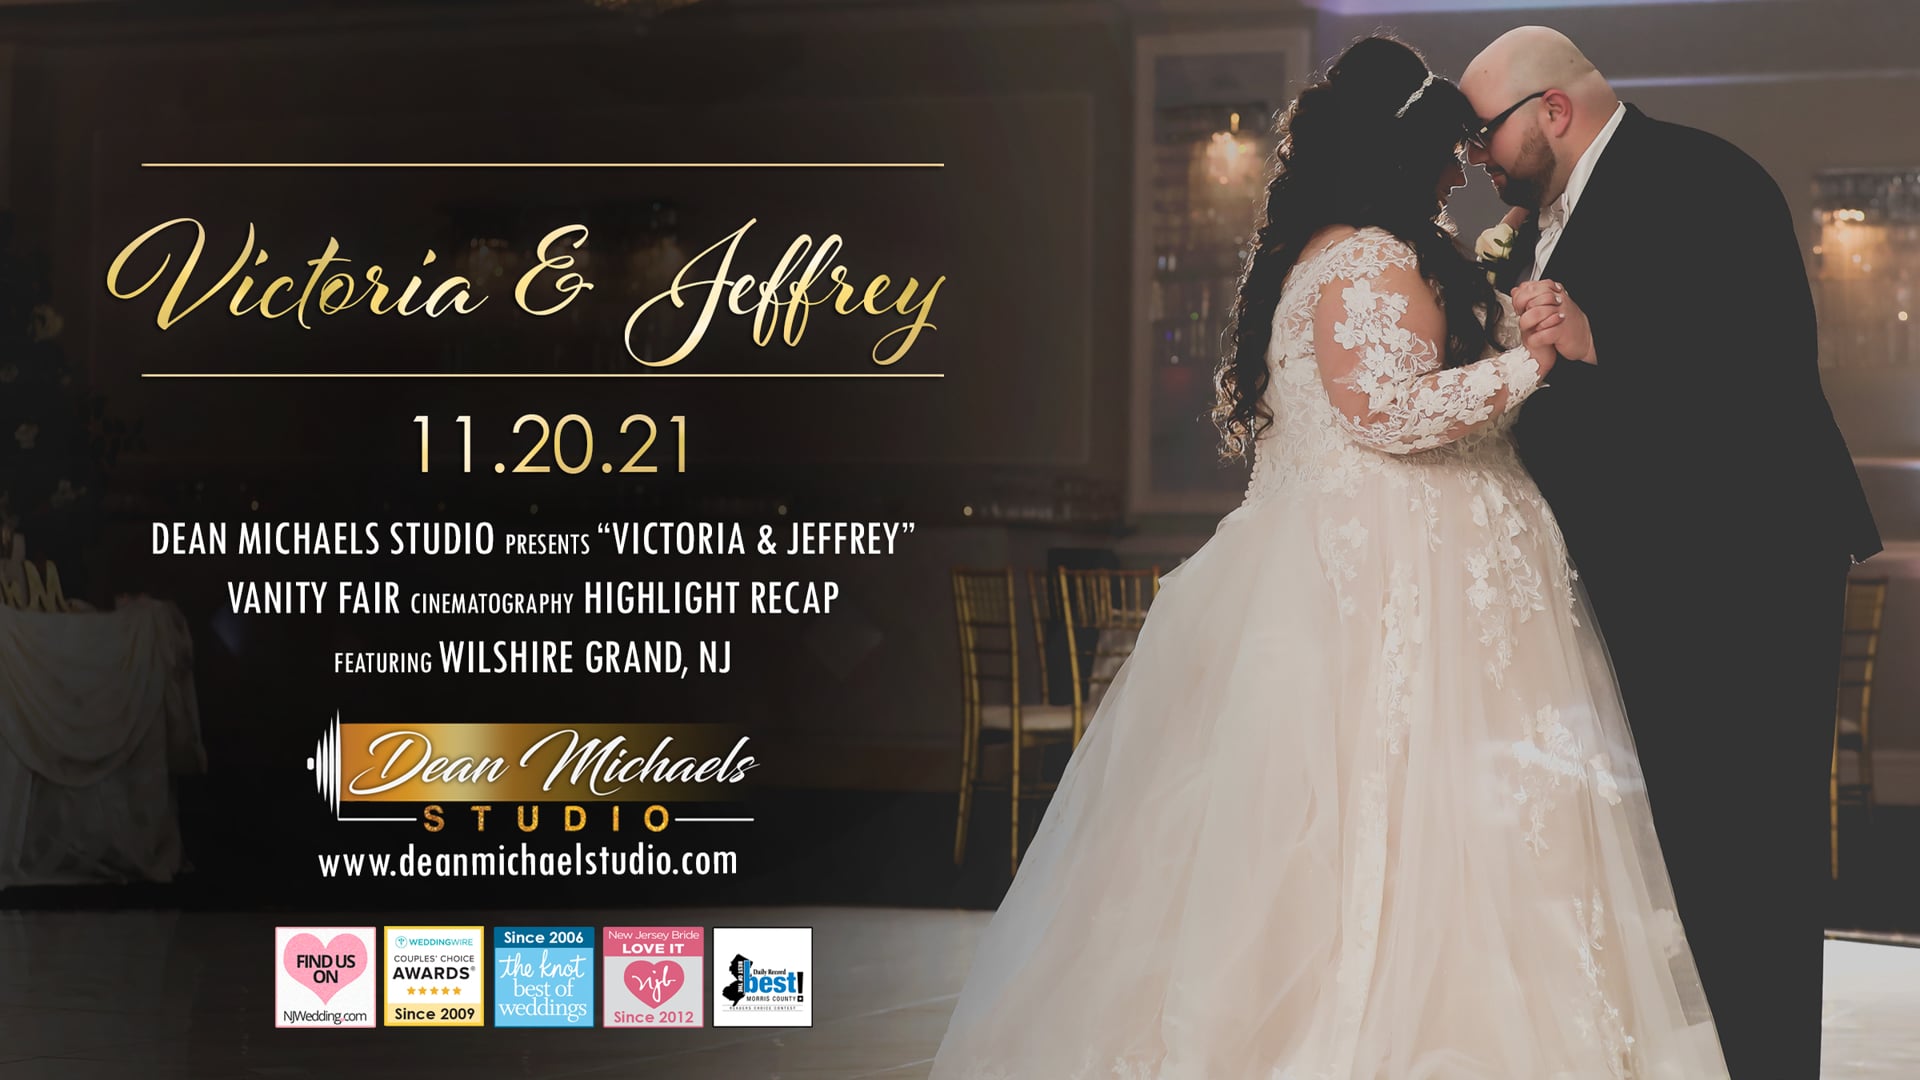 Victoria & Jeffrey's Wedding Highlight at The Wilshire Grand, NJ